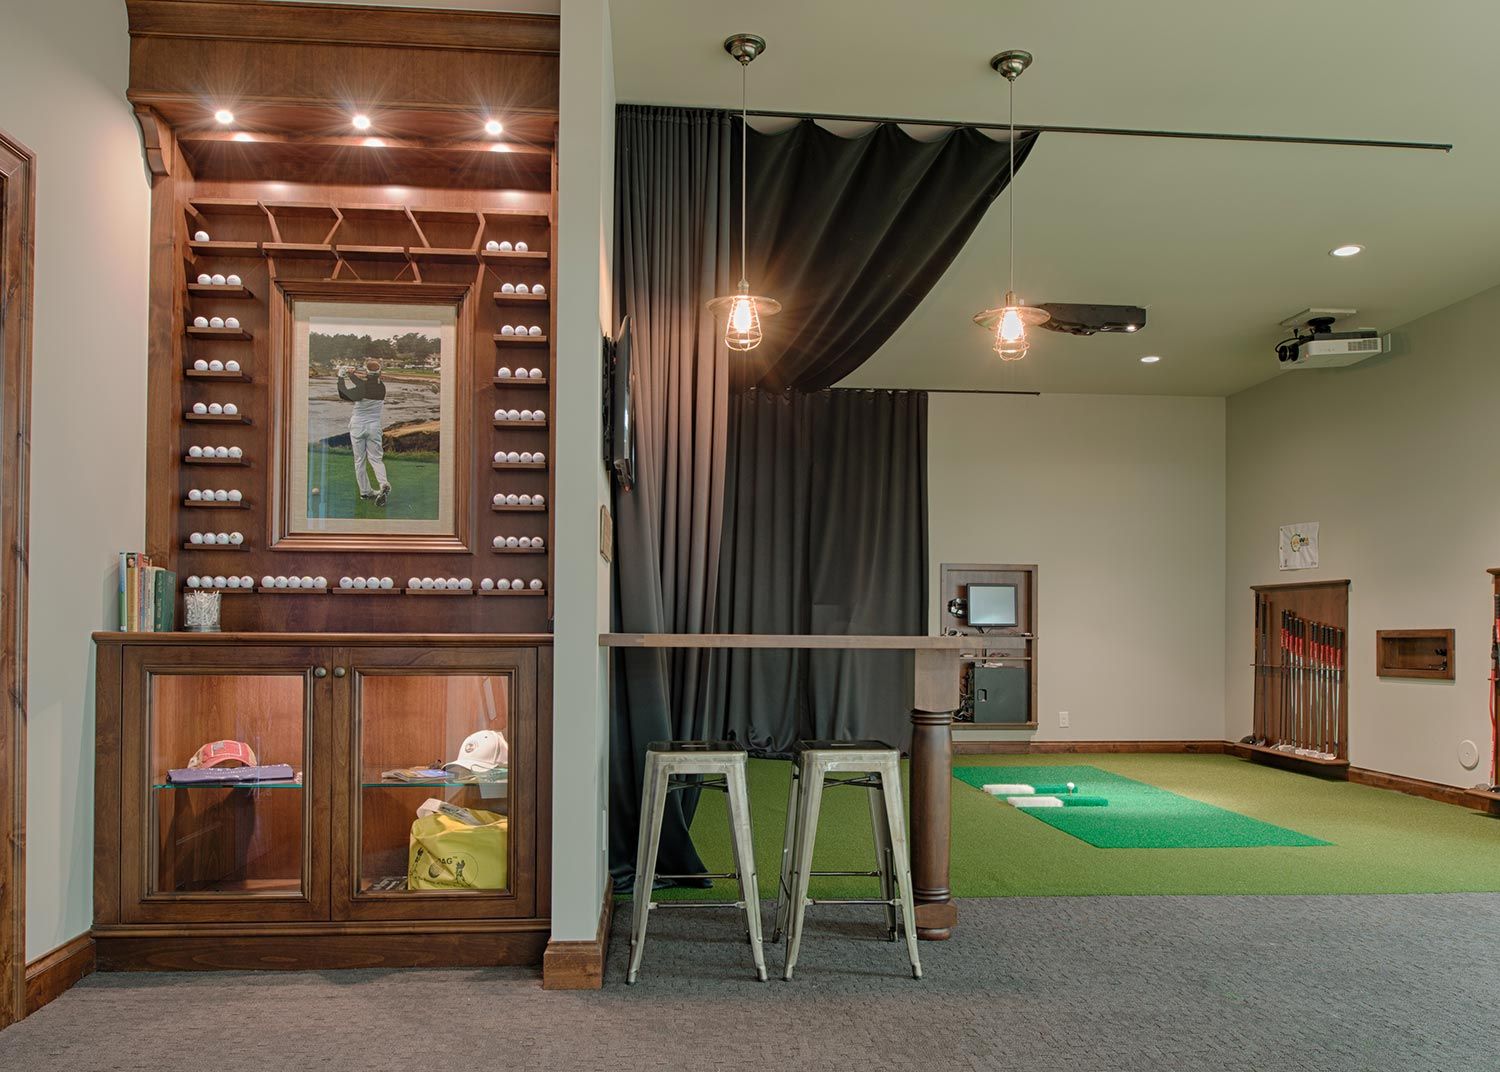 Golf ball exhibition and a Golf Simulator